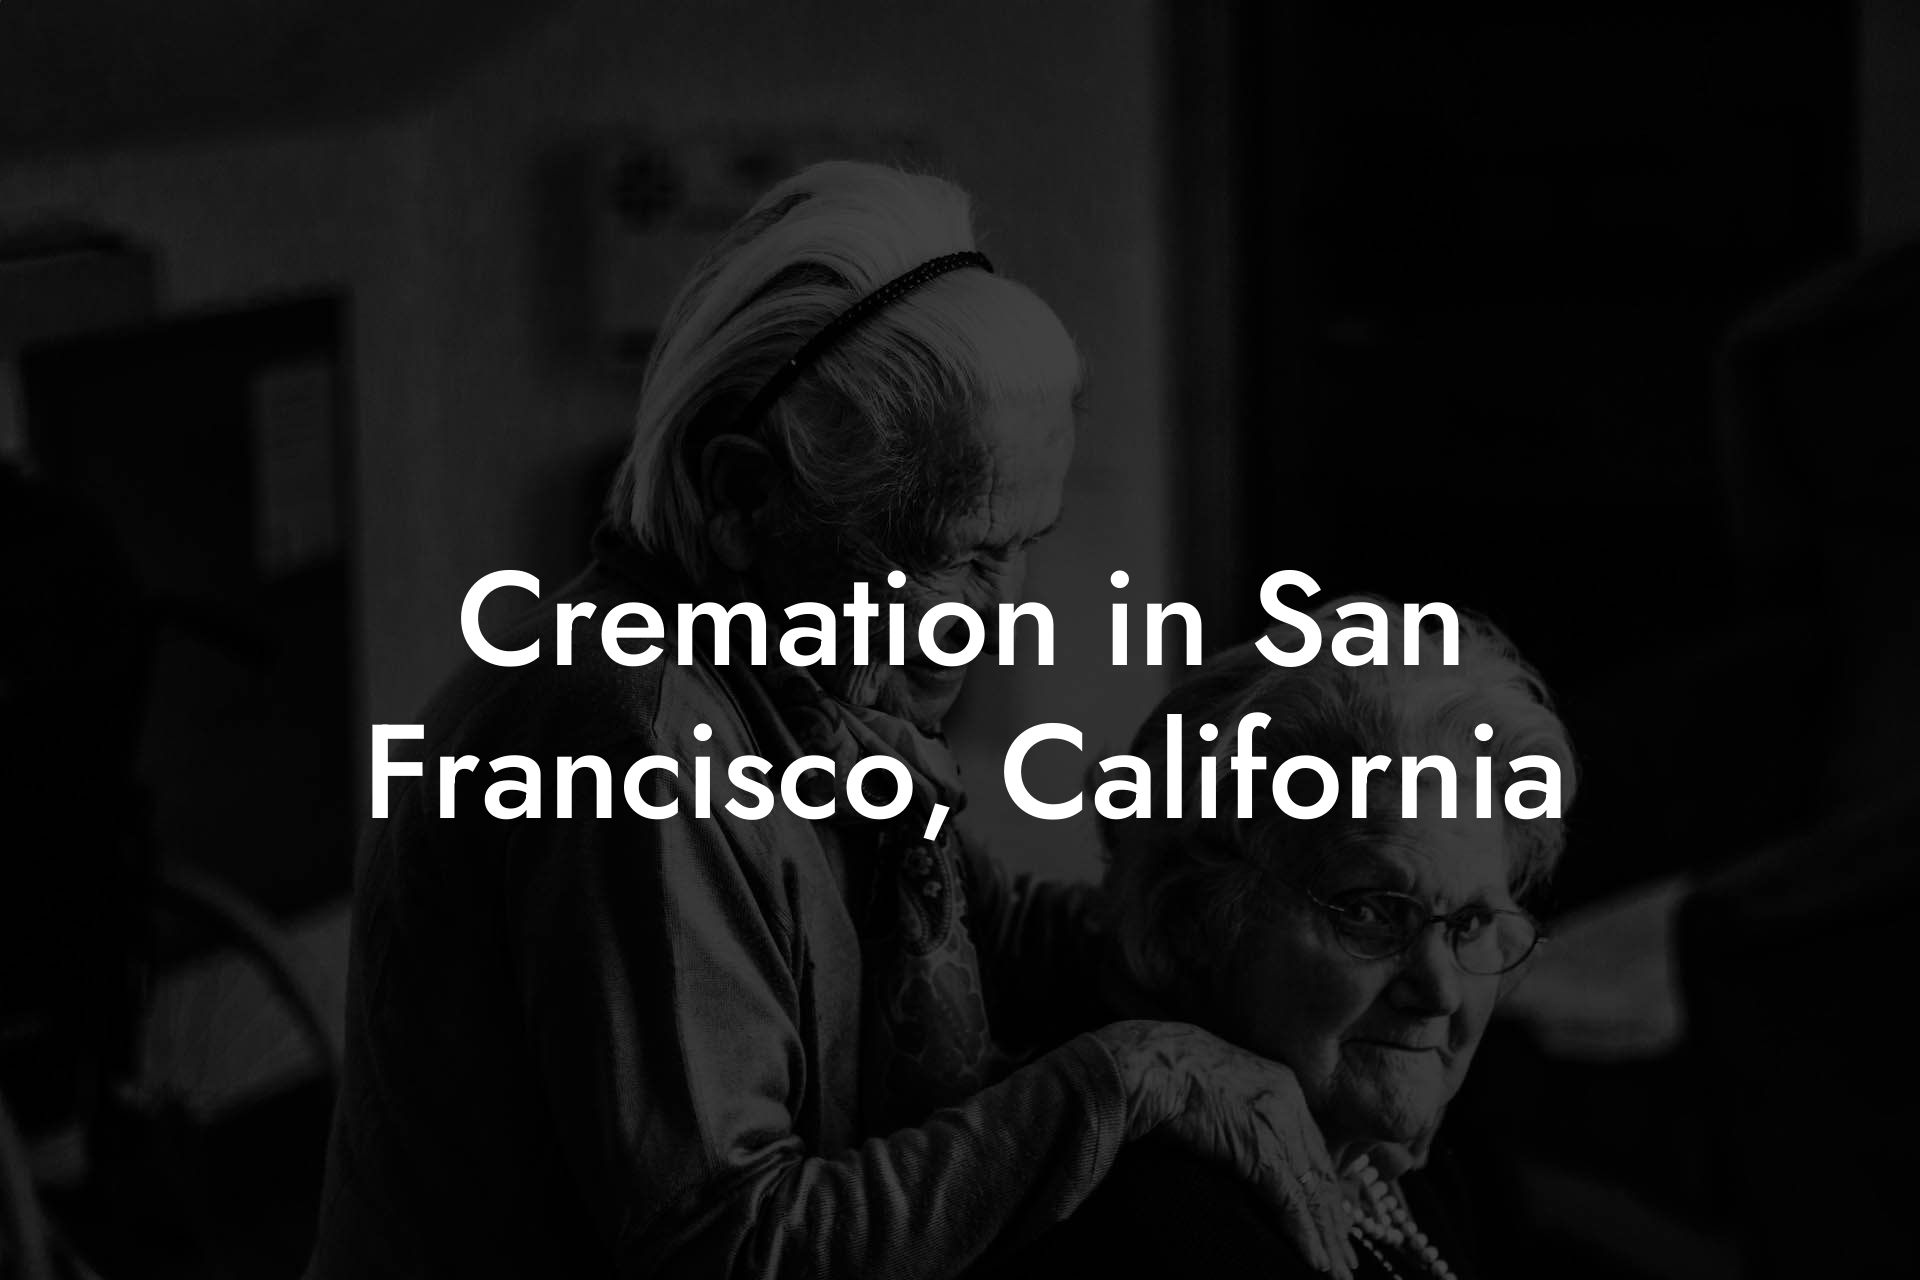 Cremation in San Francisco, California